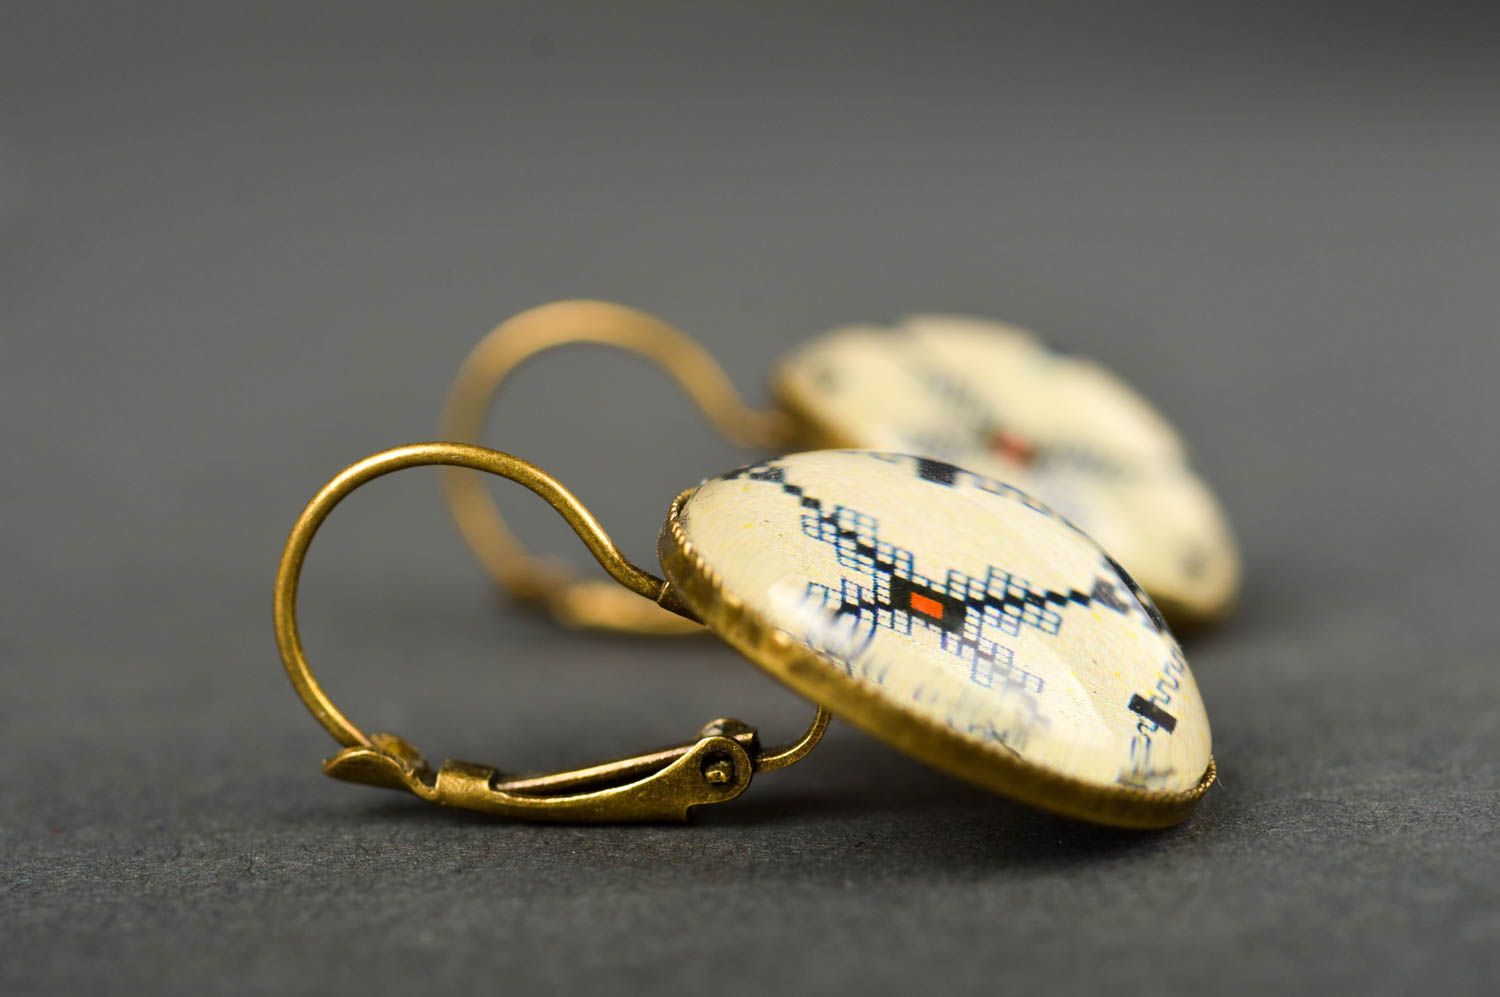 Vintage earrings handmade round-shaped earrings fashion jewelry stylish jewelry photo 3